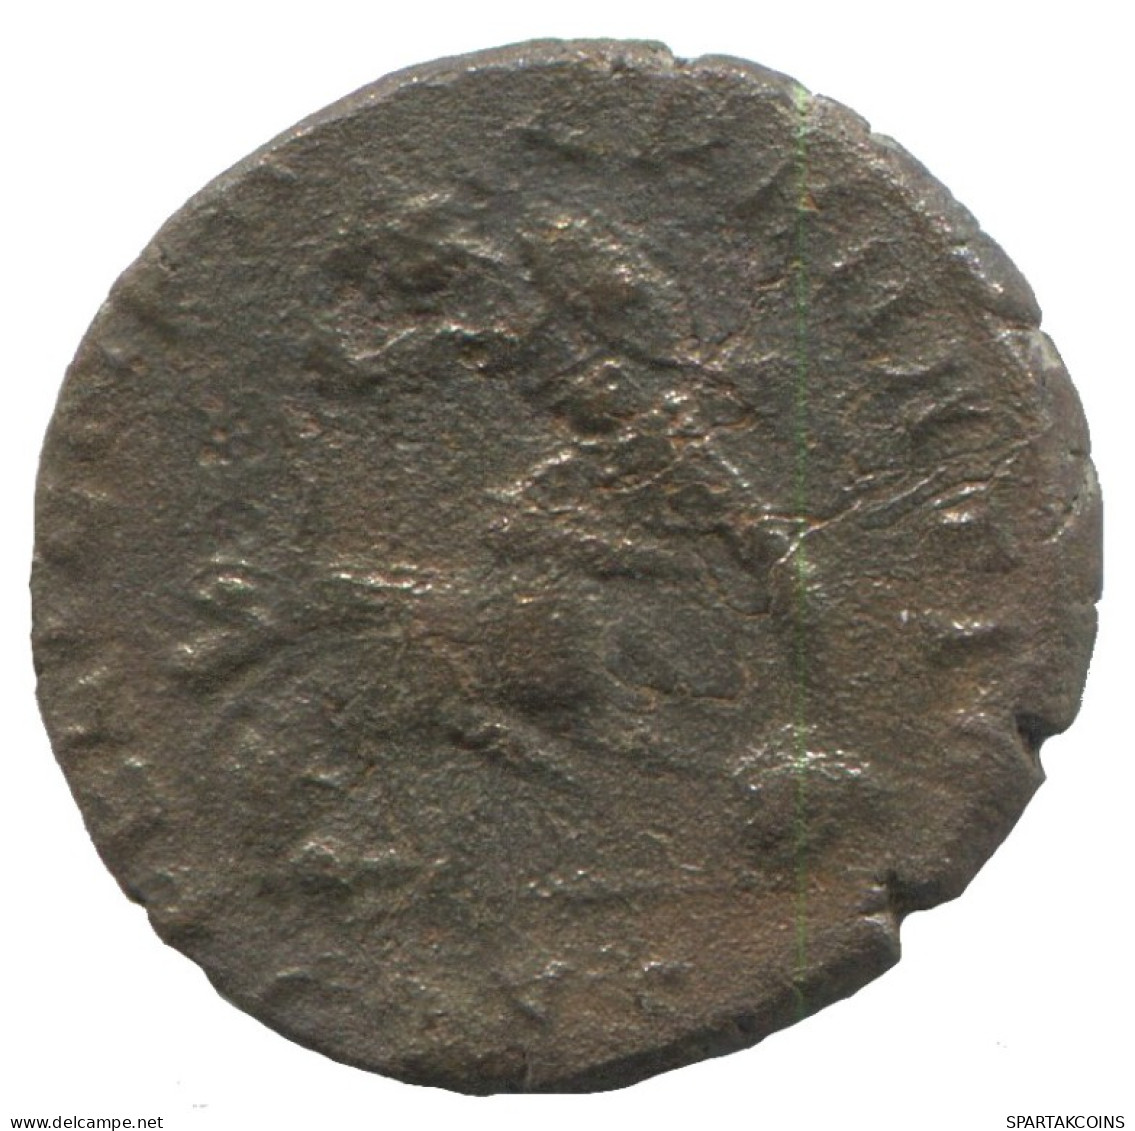 CONSTANTIUS II AD337-361 FEL TEMP REPARATIO 2.7g/17mm #ANN1635.30.U.A - The Christian Empire (307 AD Tot 363 AD)